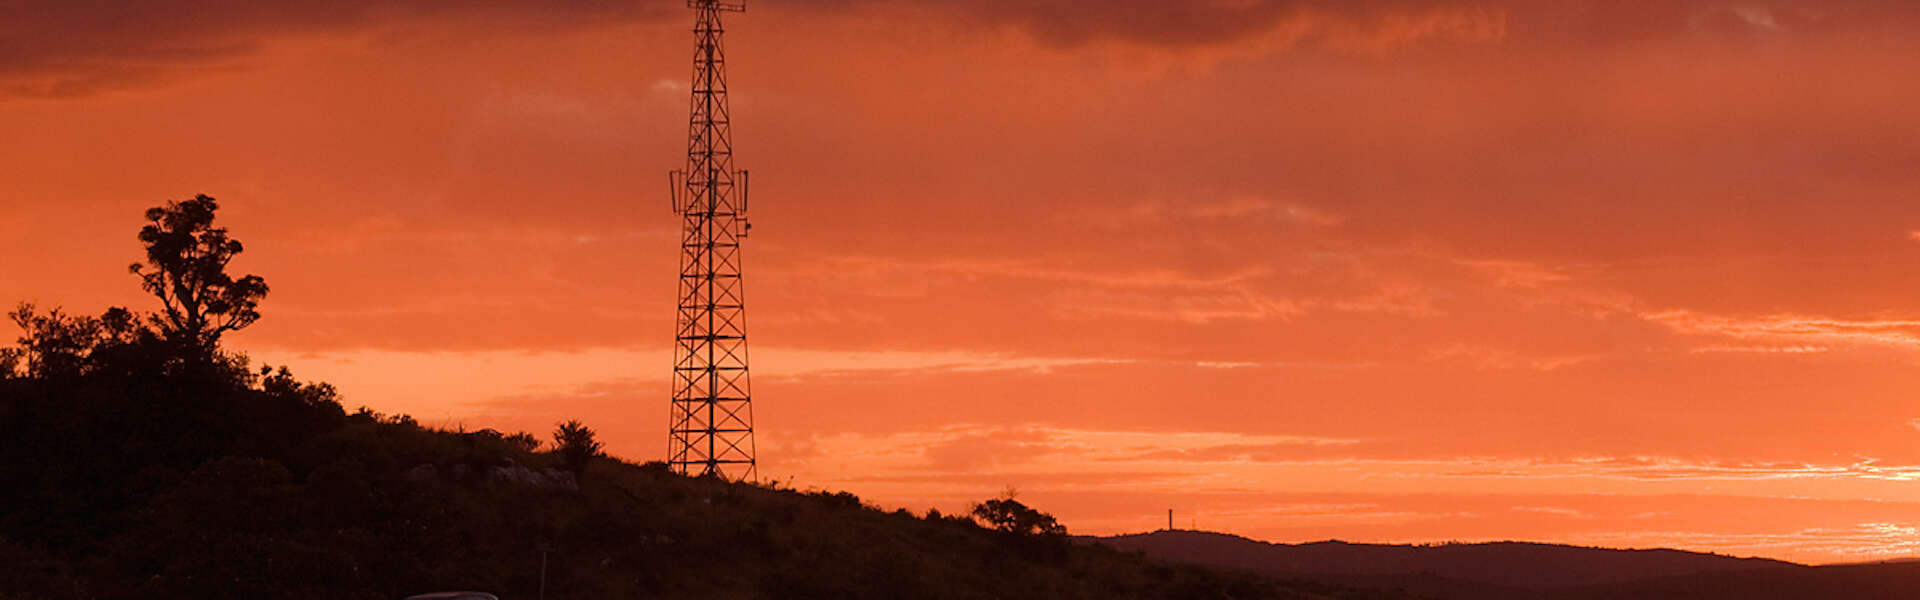 Cellphone tower in Africa. NextBillion.net